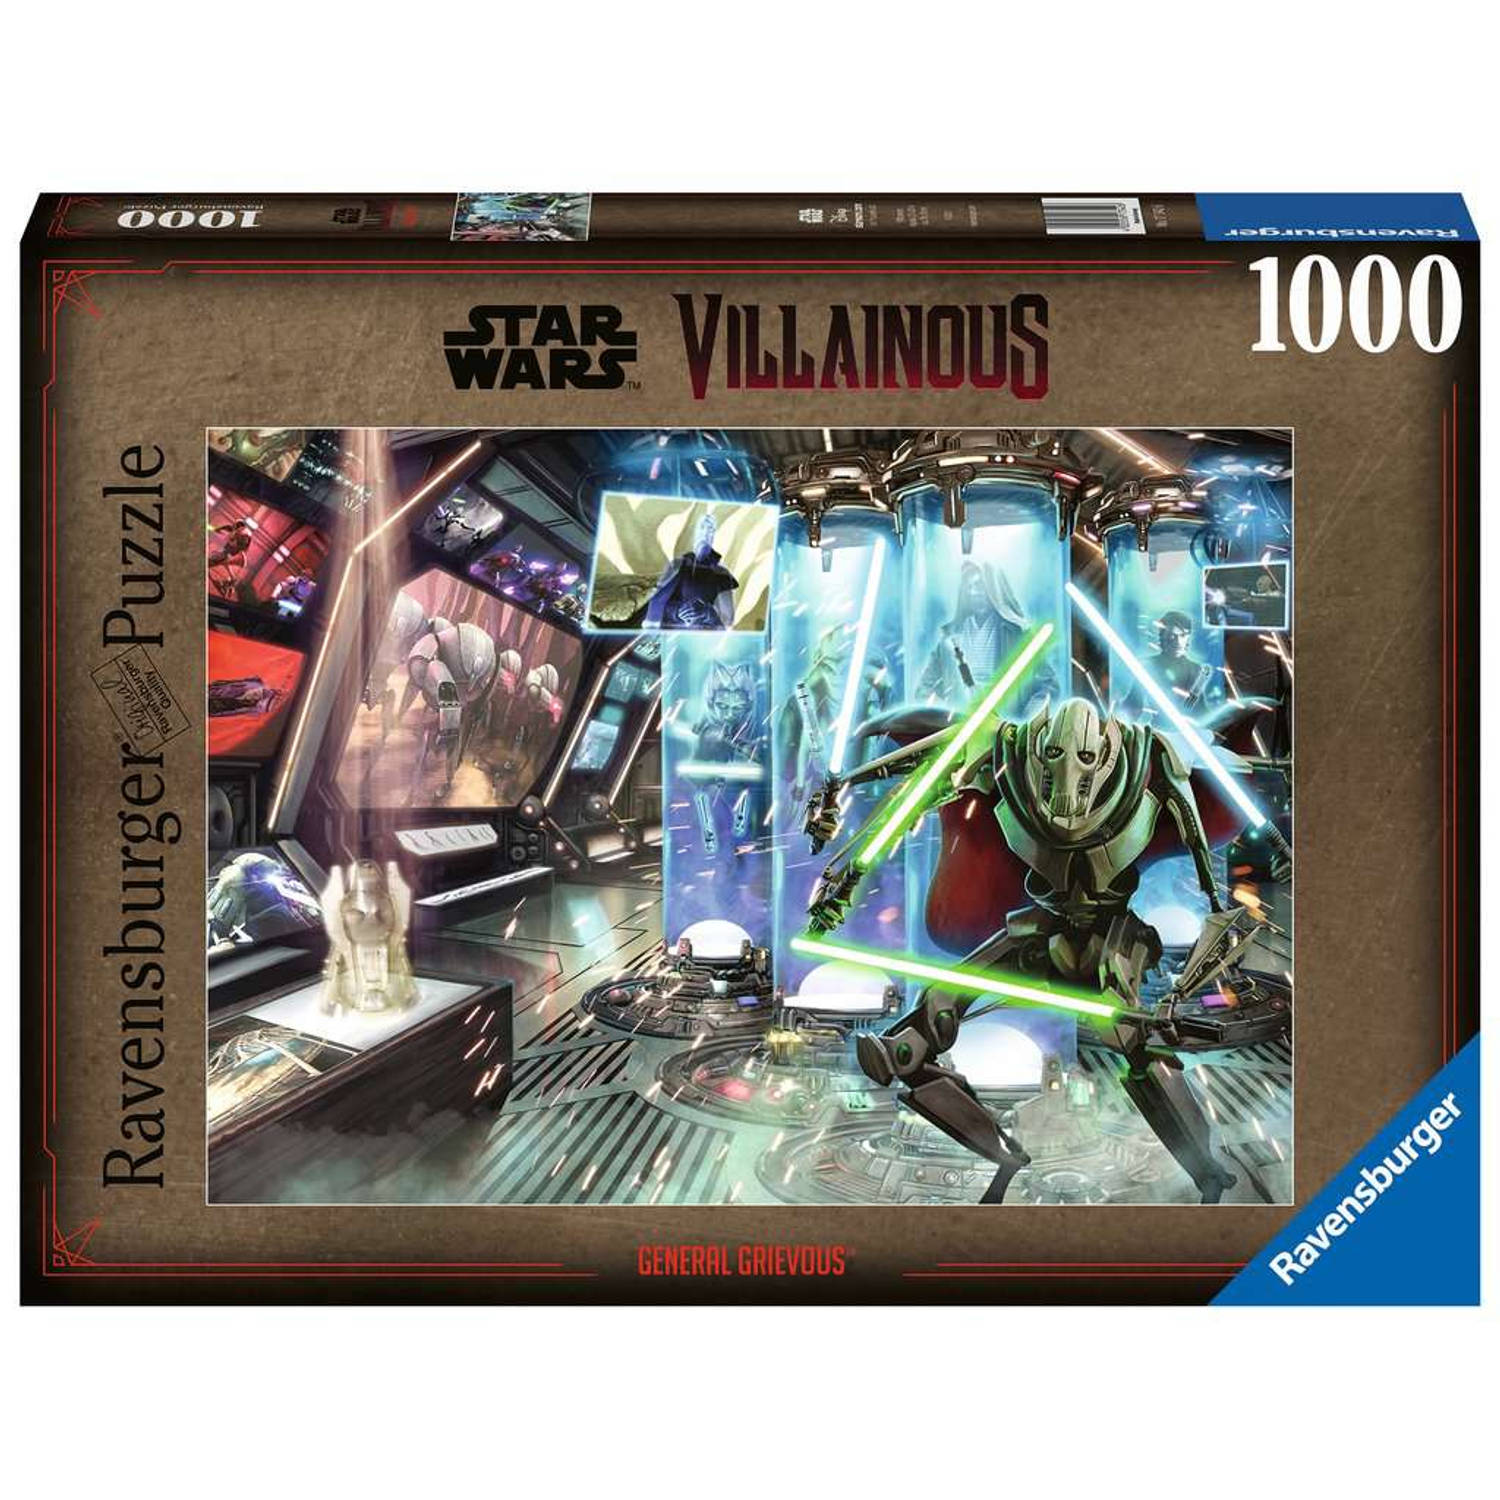 Ravensburger puzzel 1000 stukjes Star Wars villainous general grievous